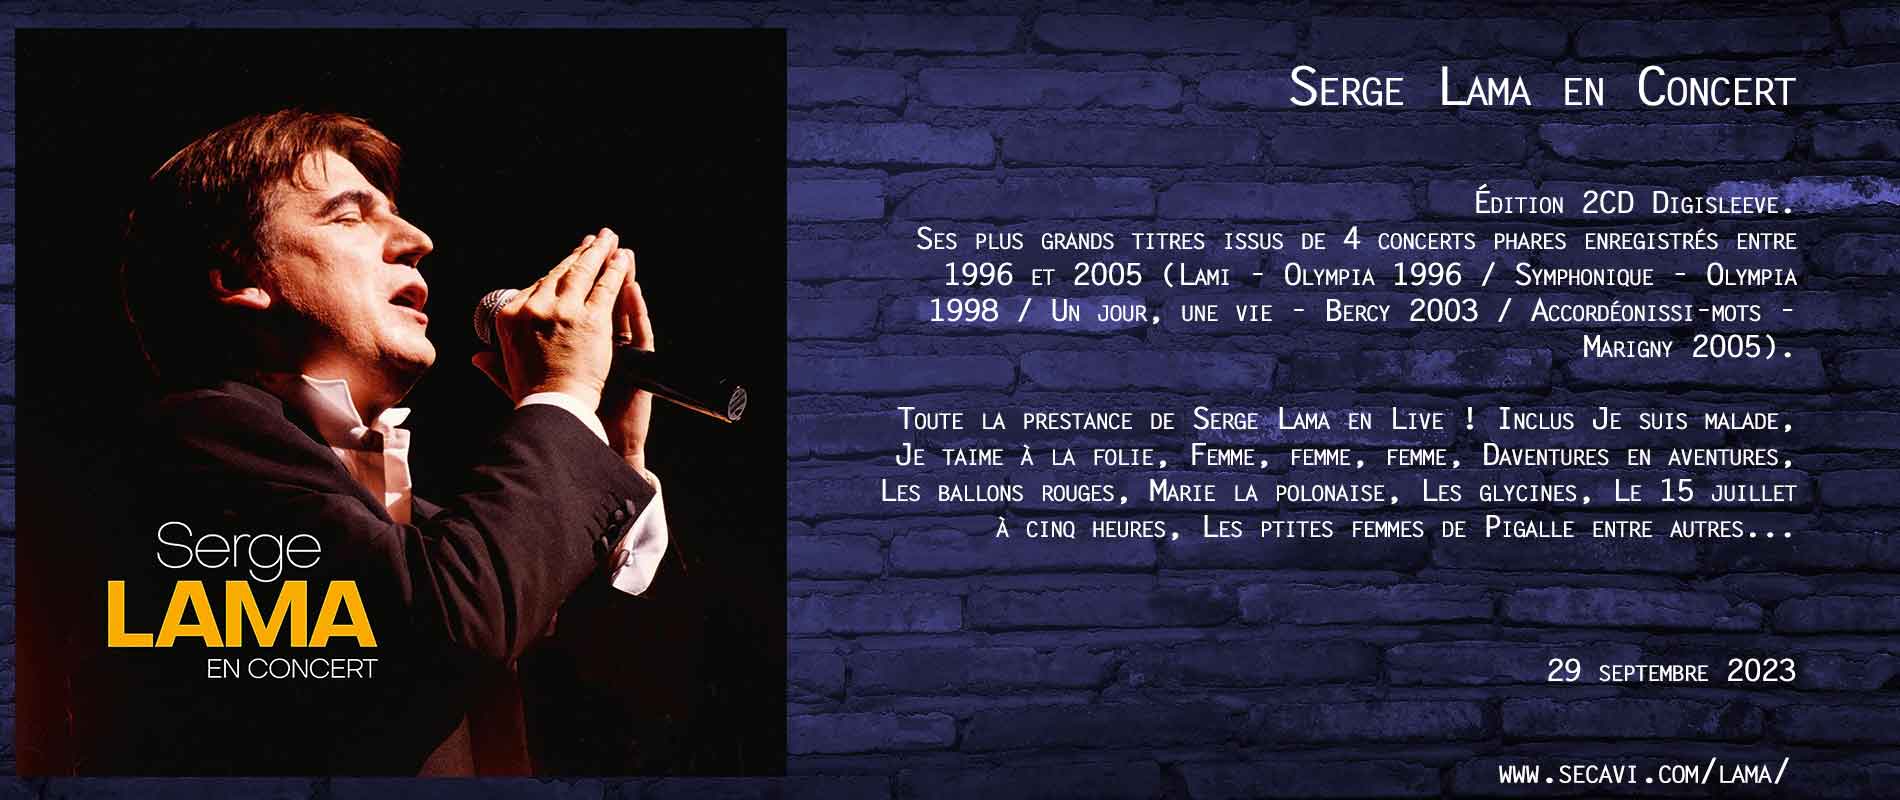 Serge Lama en concert